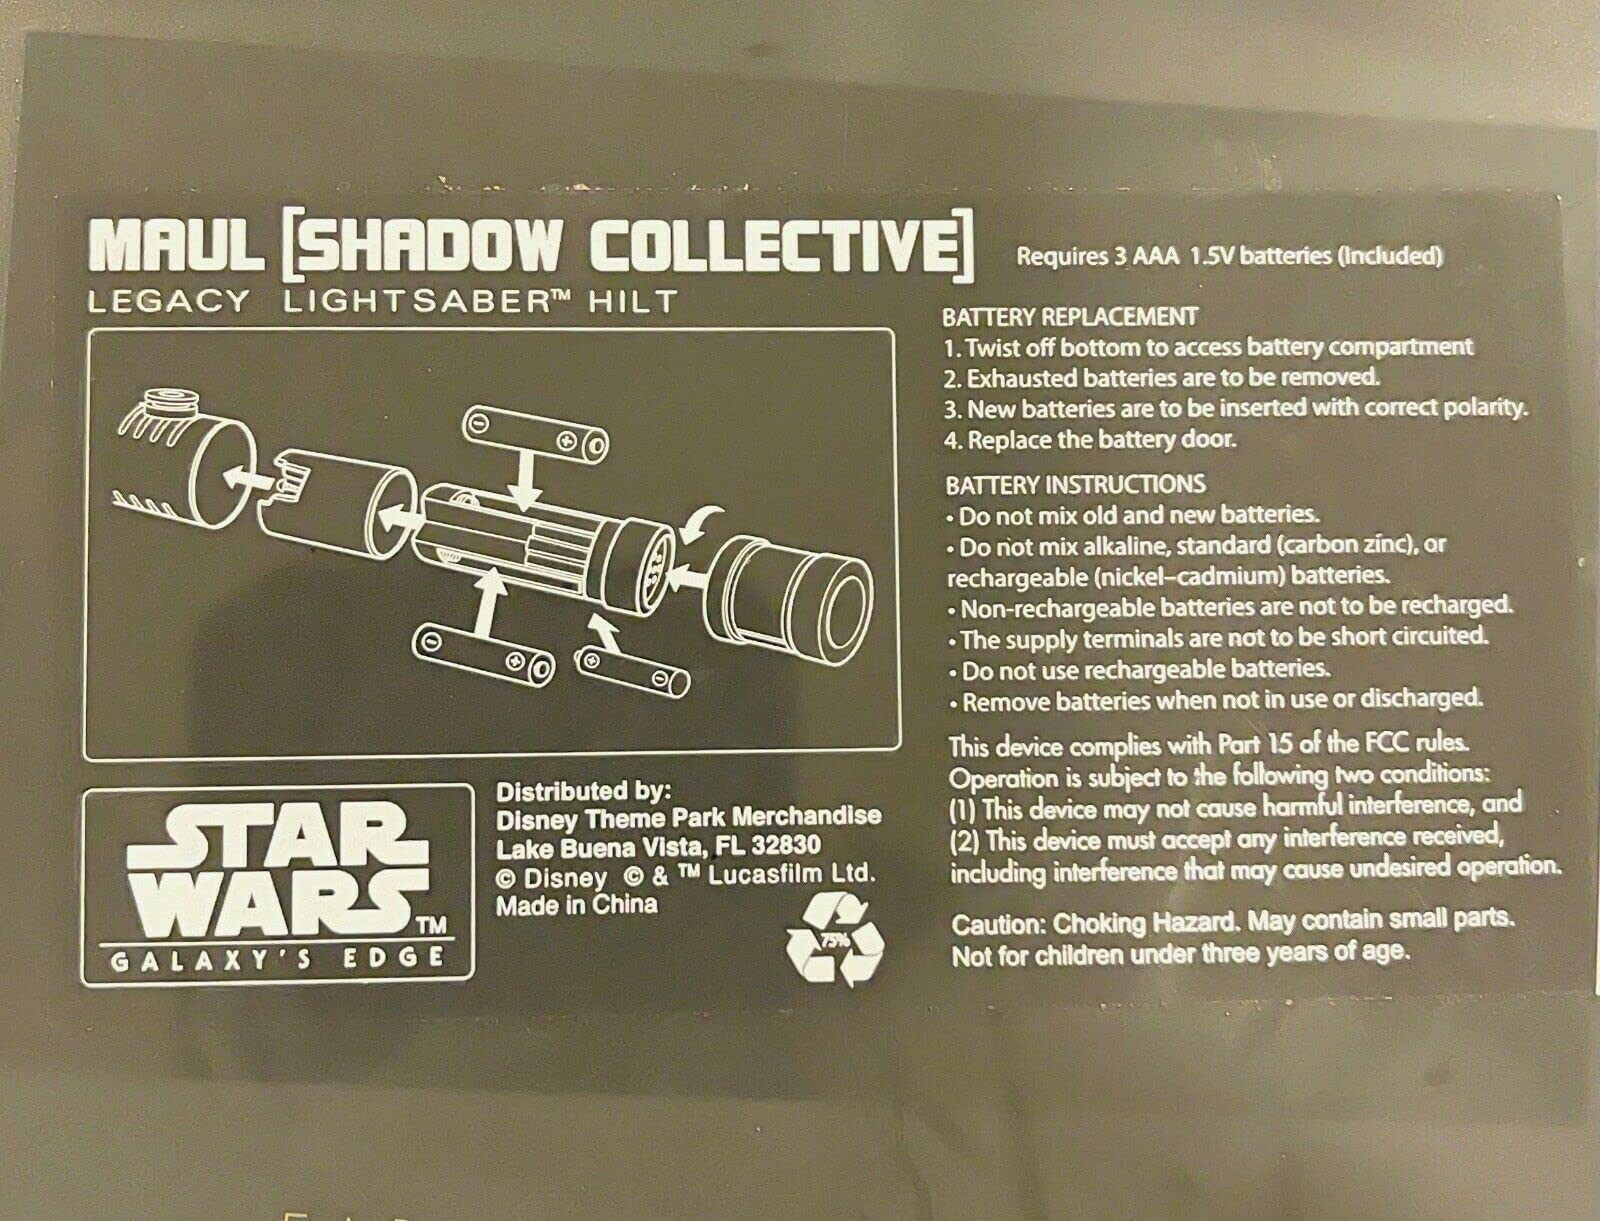 Galaxy's Edge Star Wars Darth Maul Shadow Collective Legacy Lightsaber Hilt